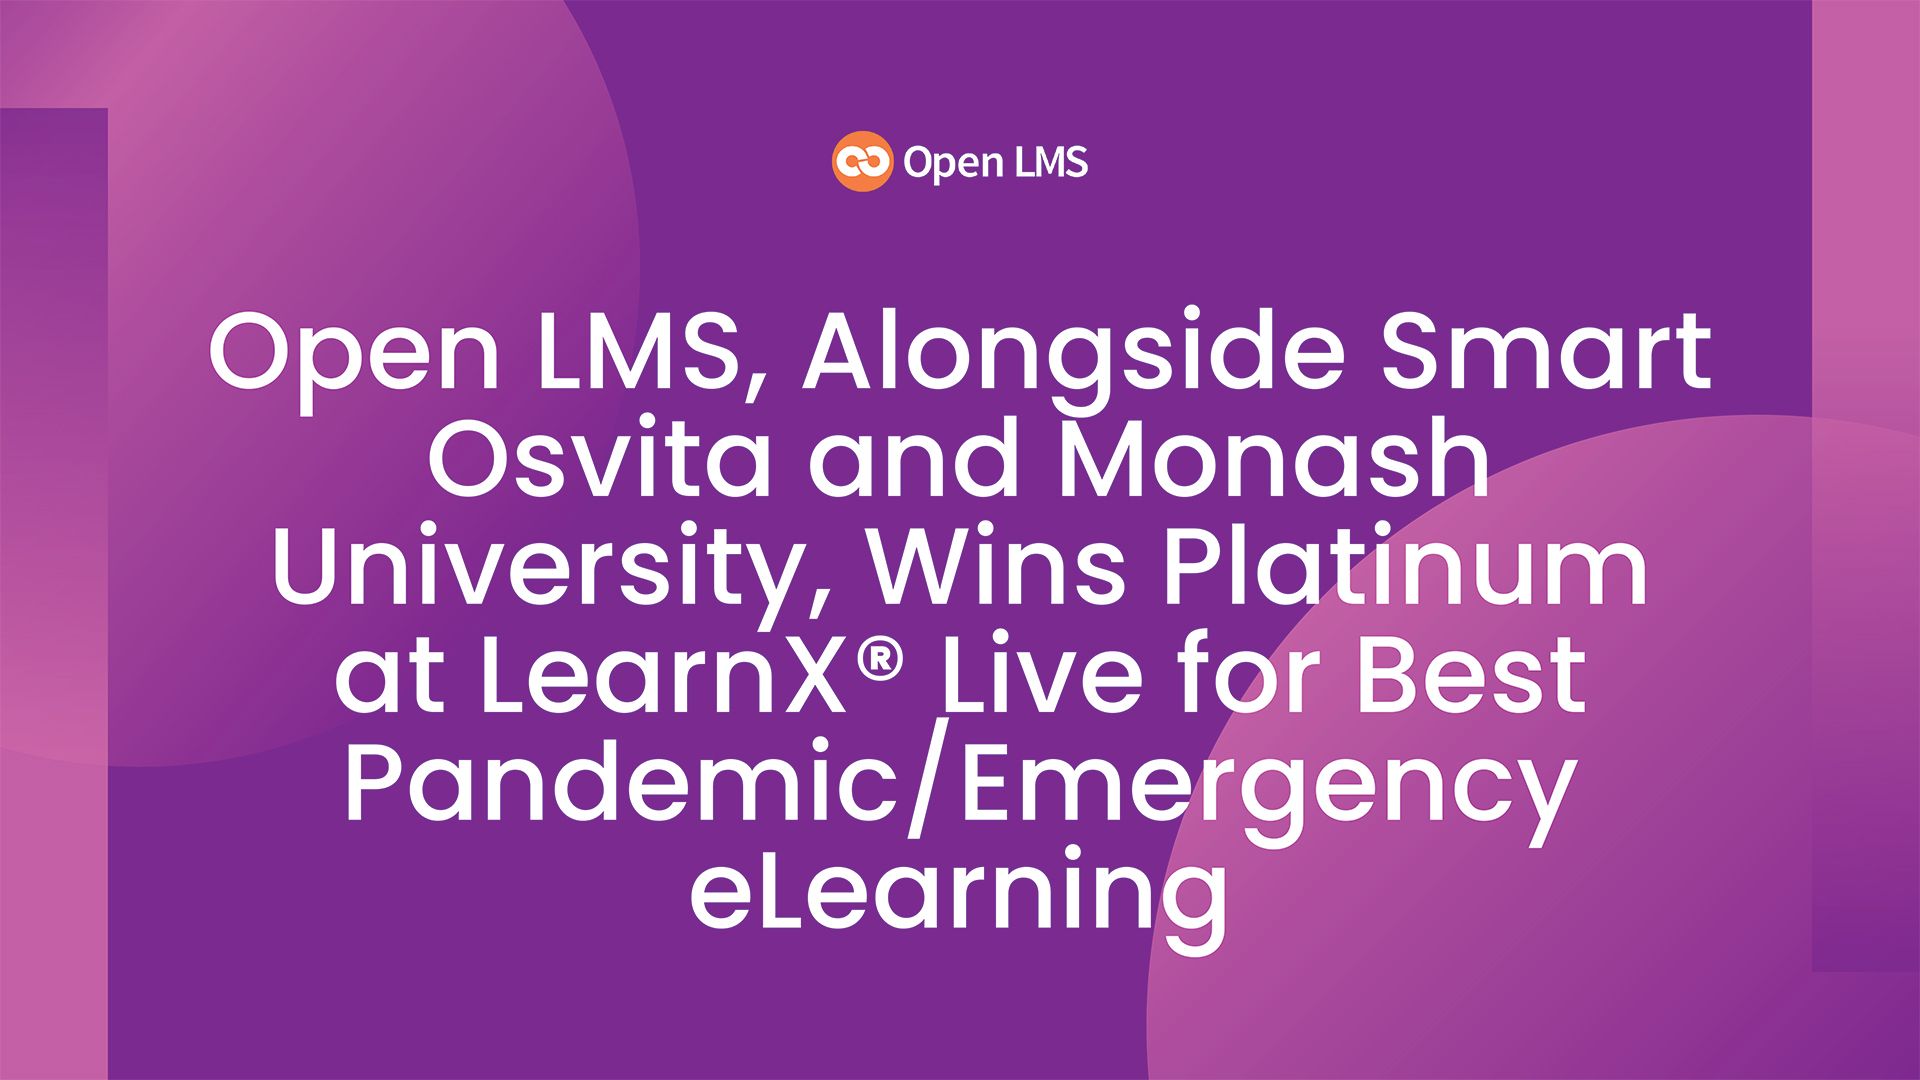 Open LMS, Alongside Smart Osvita and Monash University, Wins Platinum at LearnX® Live for Best Pandemic/Emergency eLearning